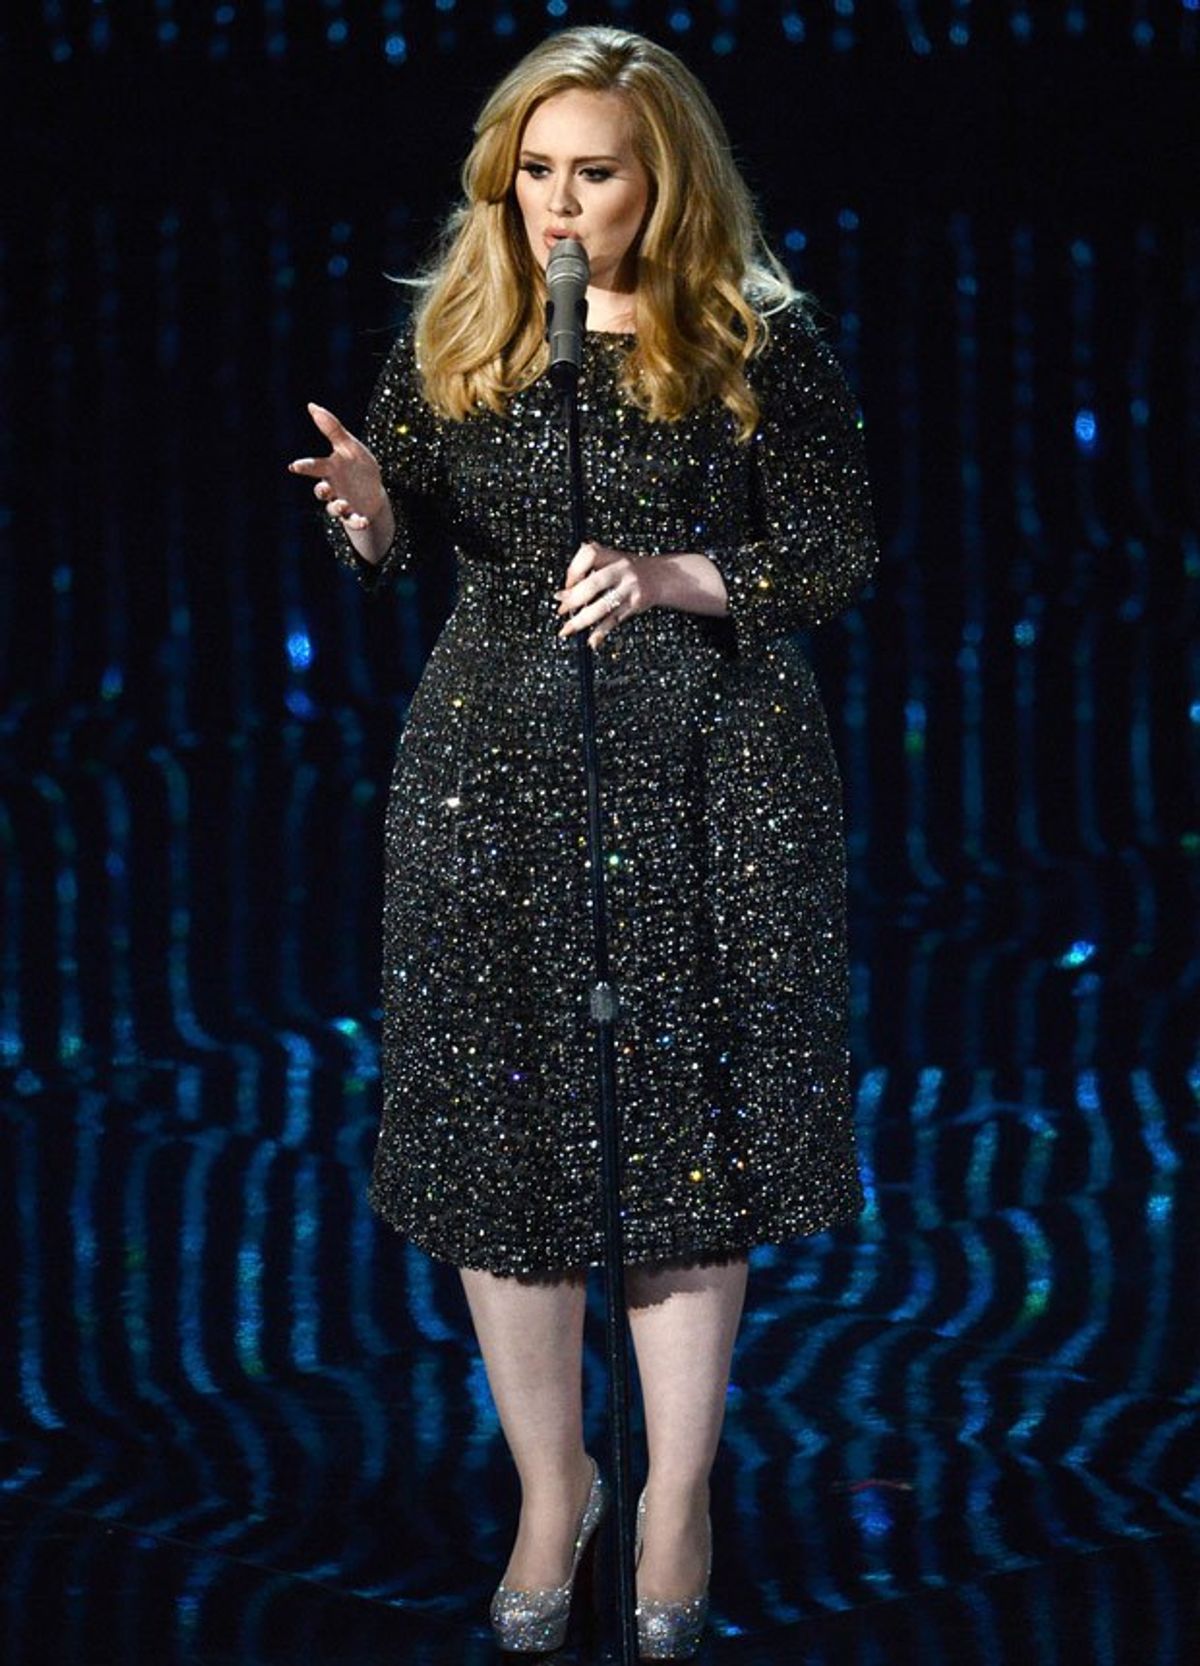 Emotional Breakdown of Adele's New Album, "25"